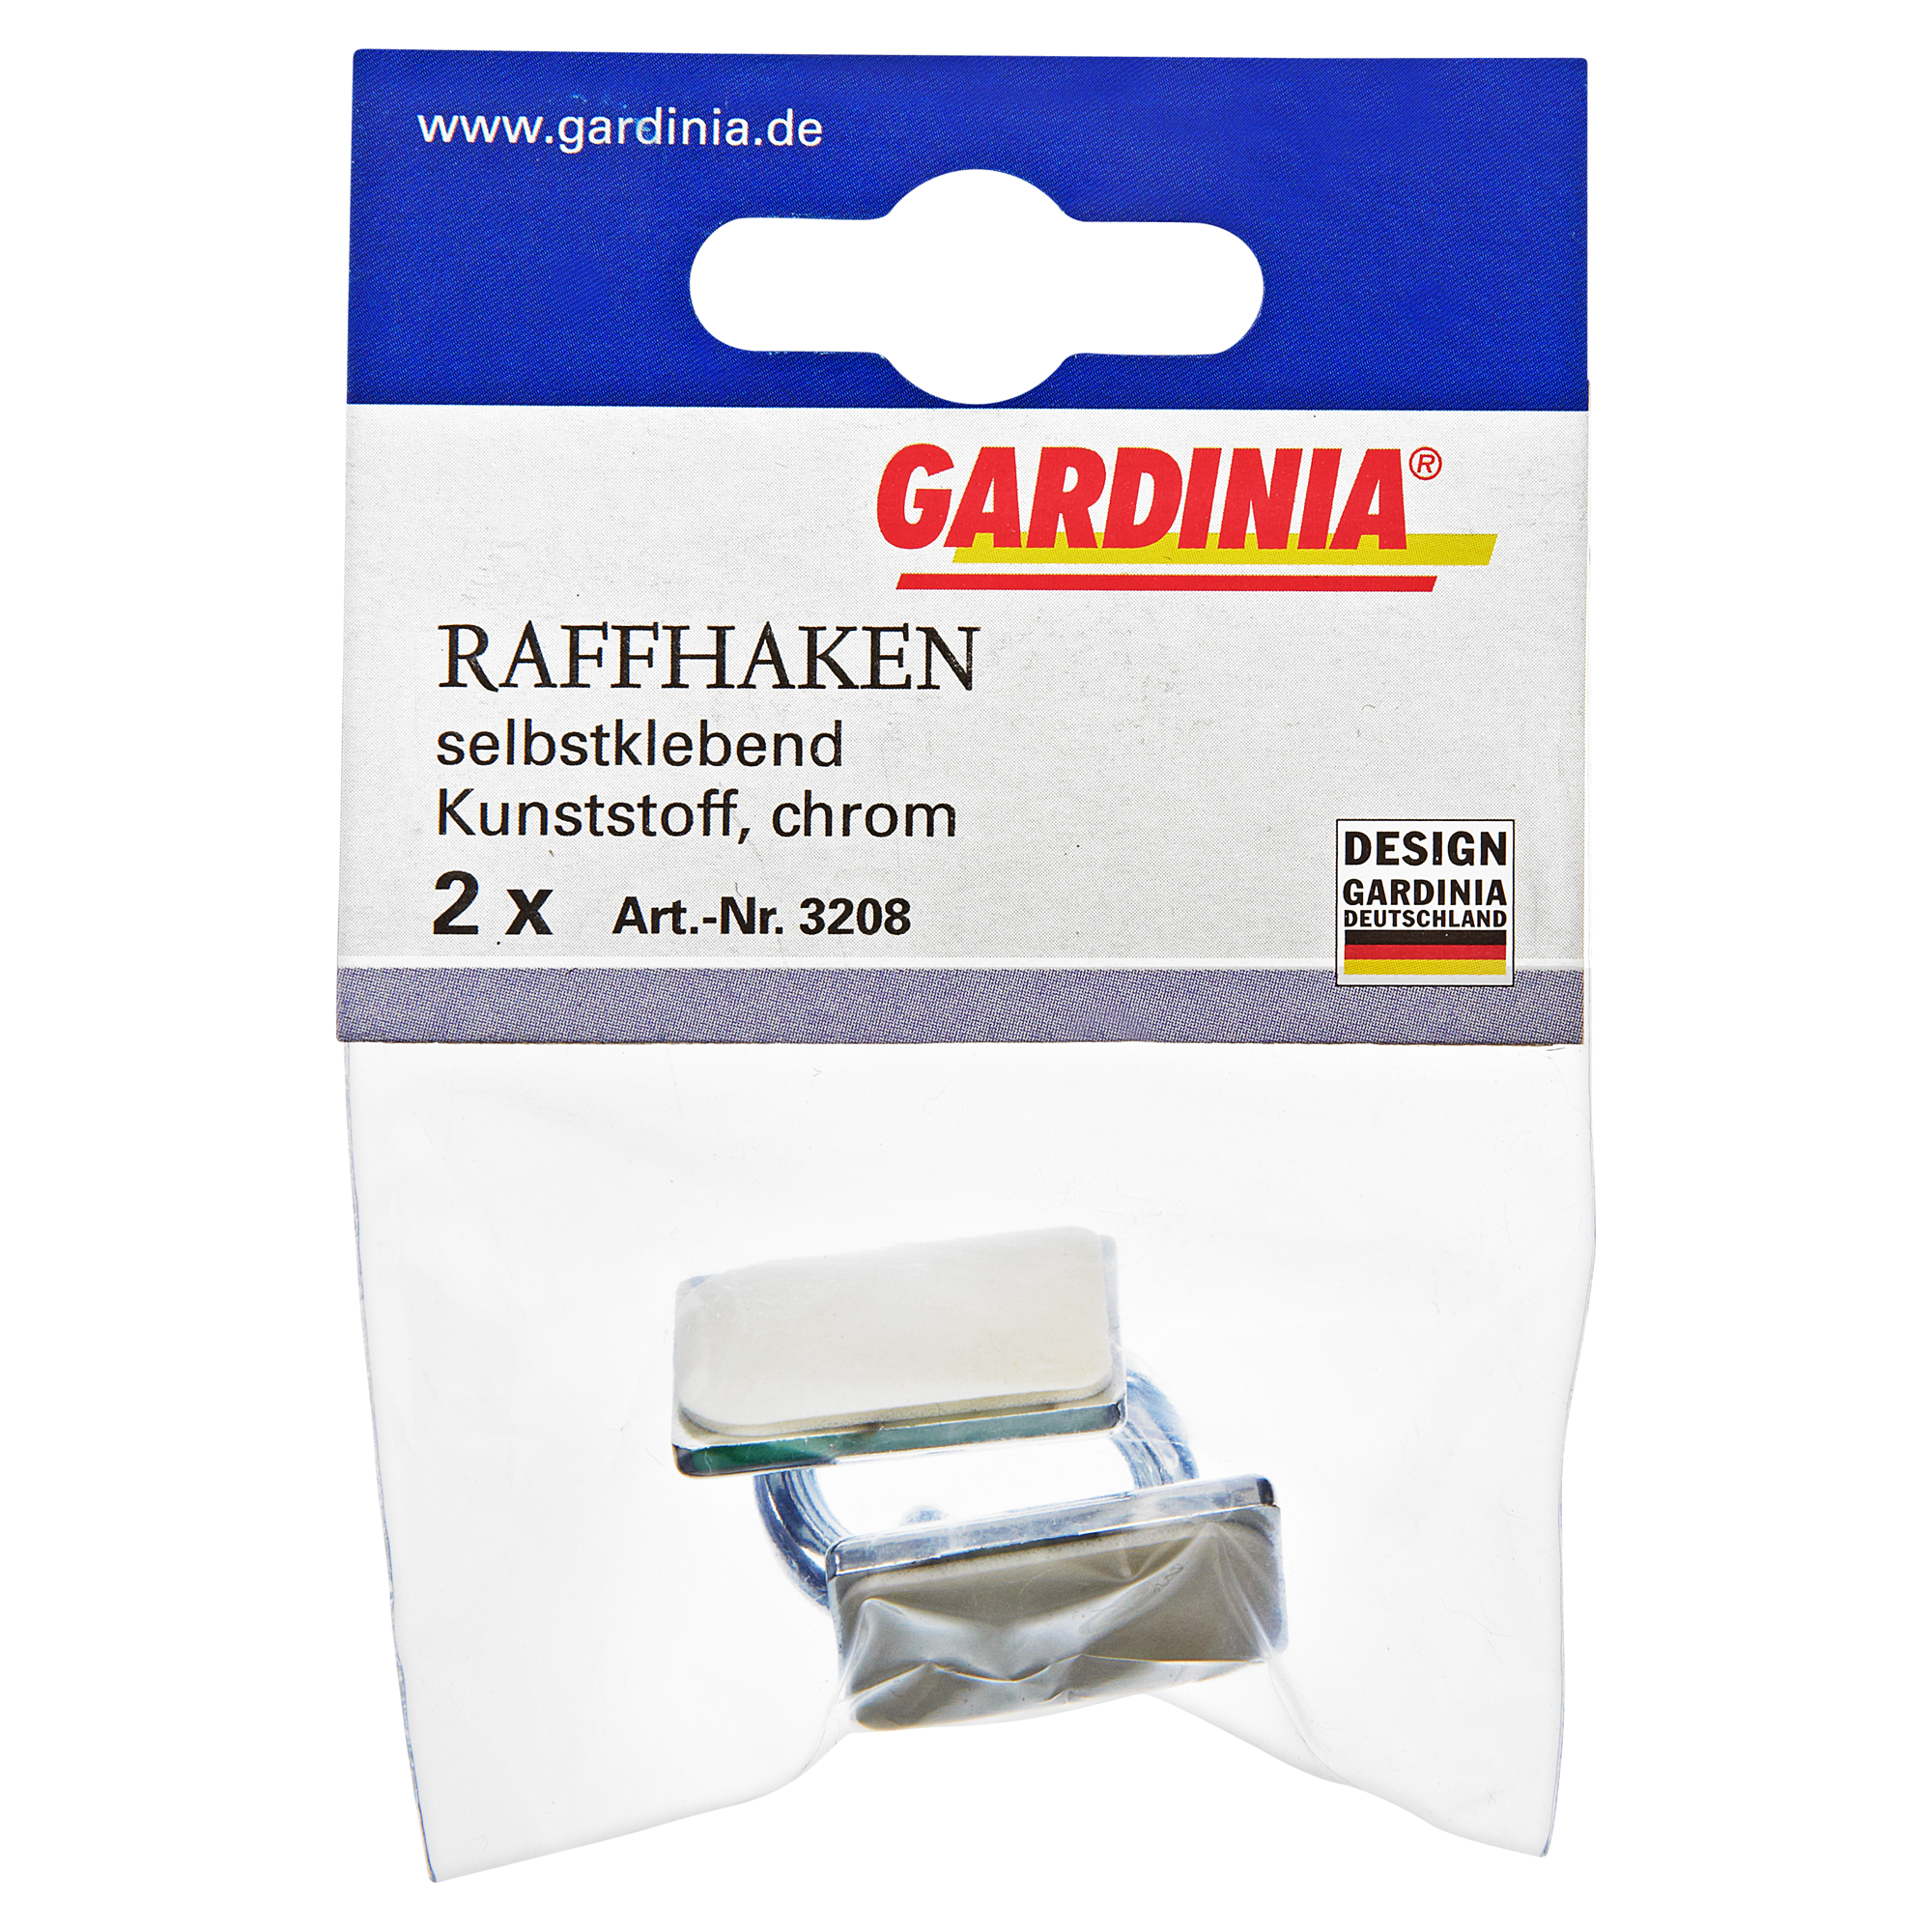 Gardinia Raffhaken 2 Stück + product picture